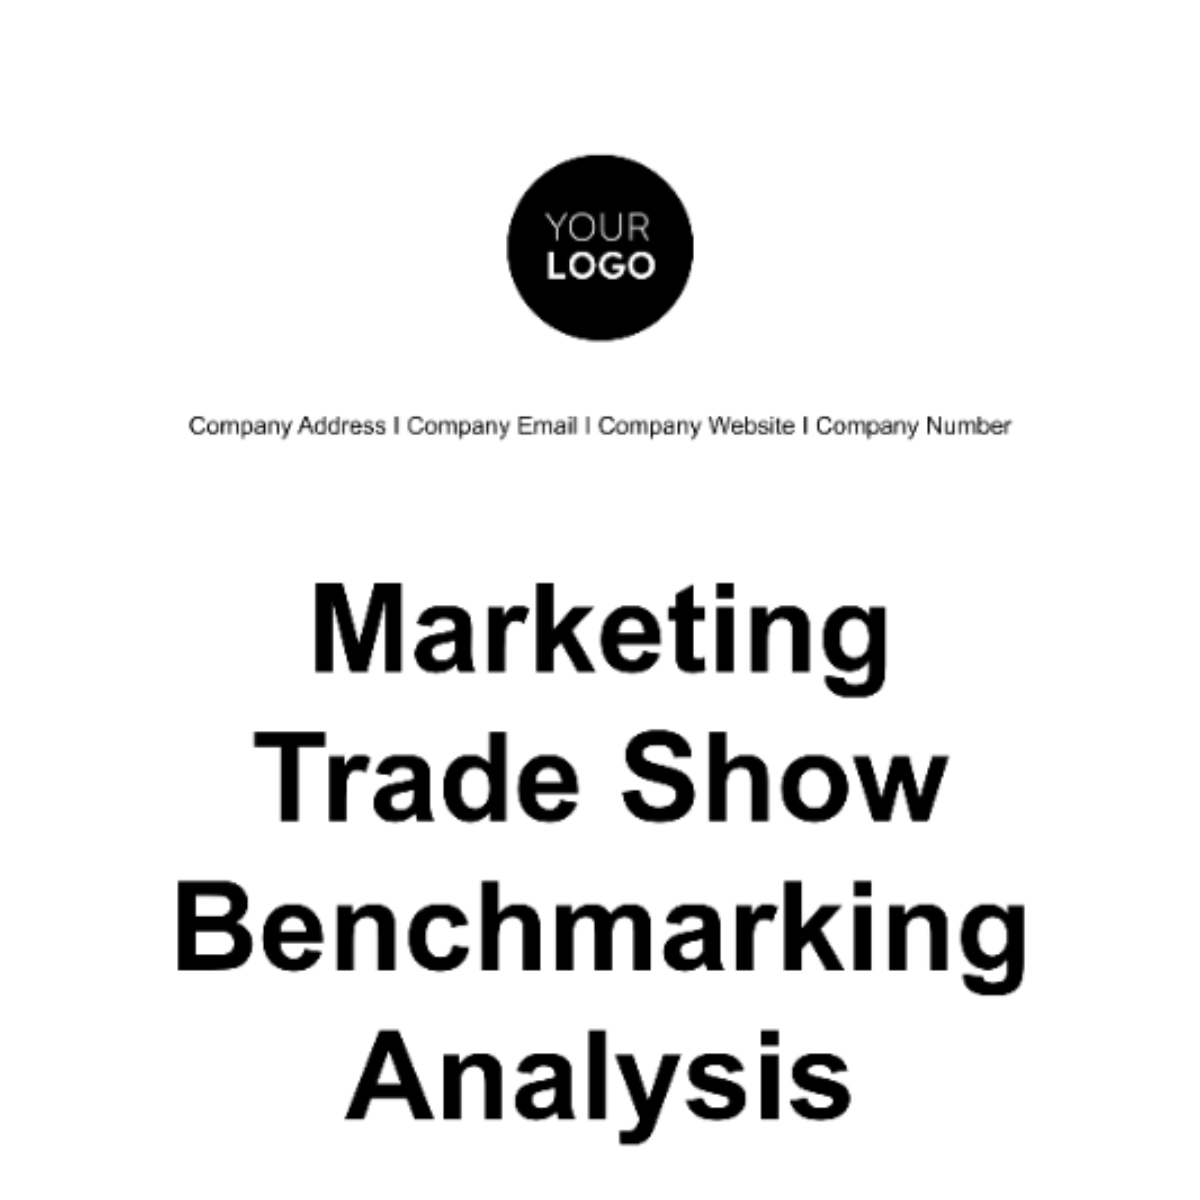 Marketing Trade Show Benchmarking Analysis Template